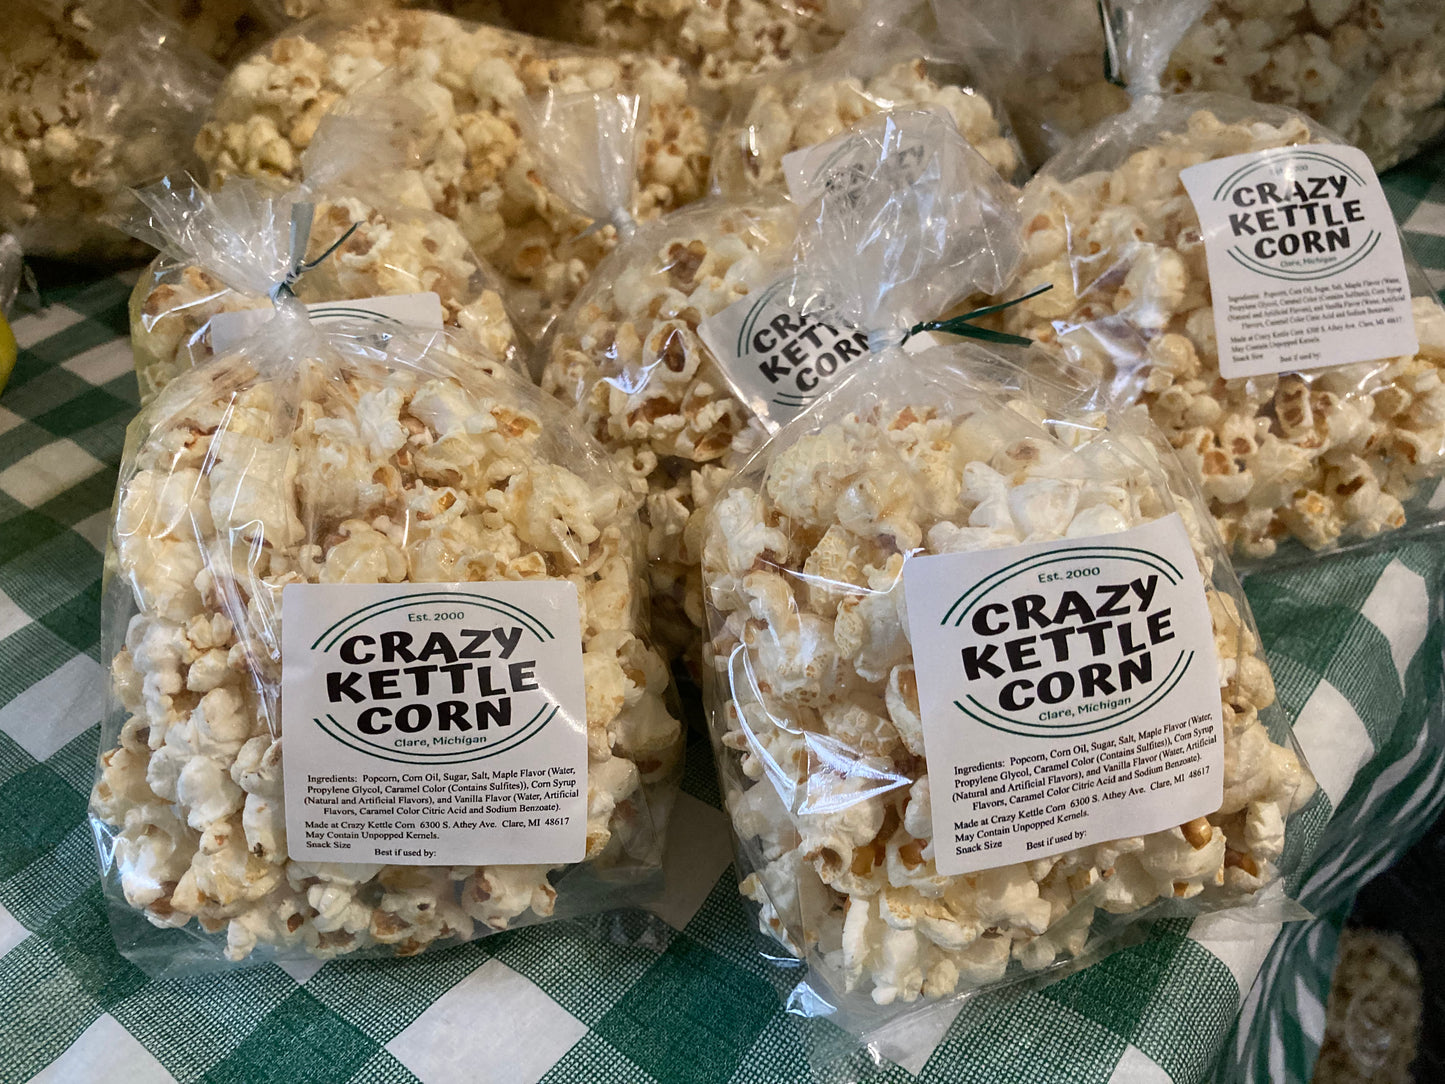 Crazy Kettle Corn 1 oz bag